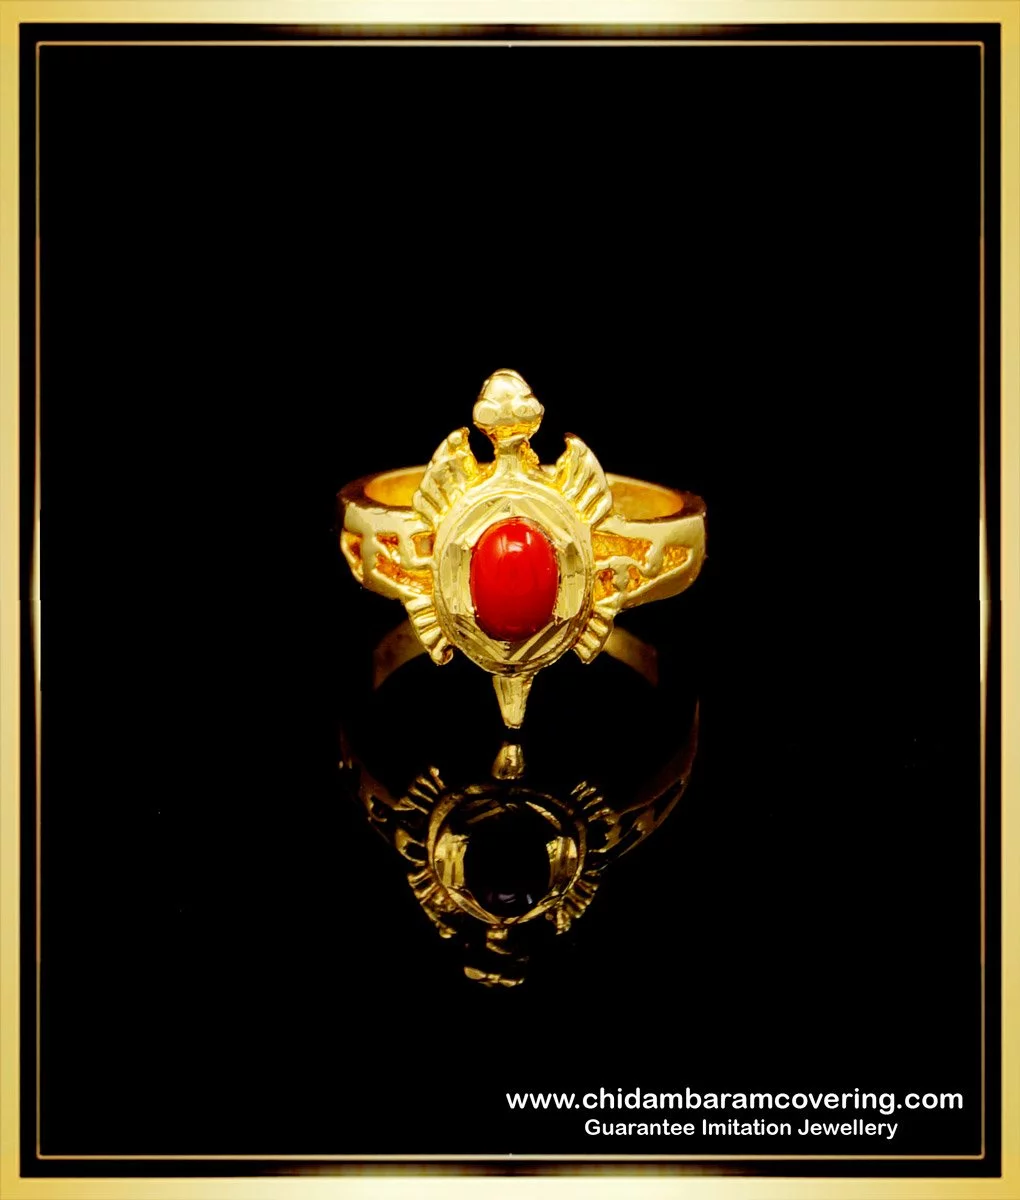 22K Gold 'Tortoise' Ring For Men with Cz & Color Stones - 235-GR6275 in  7.850 Grams